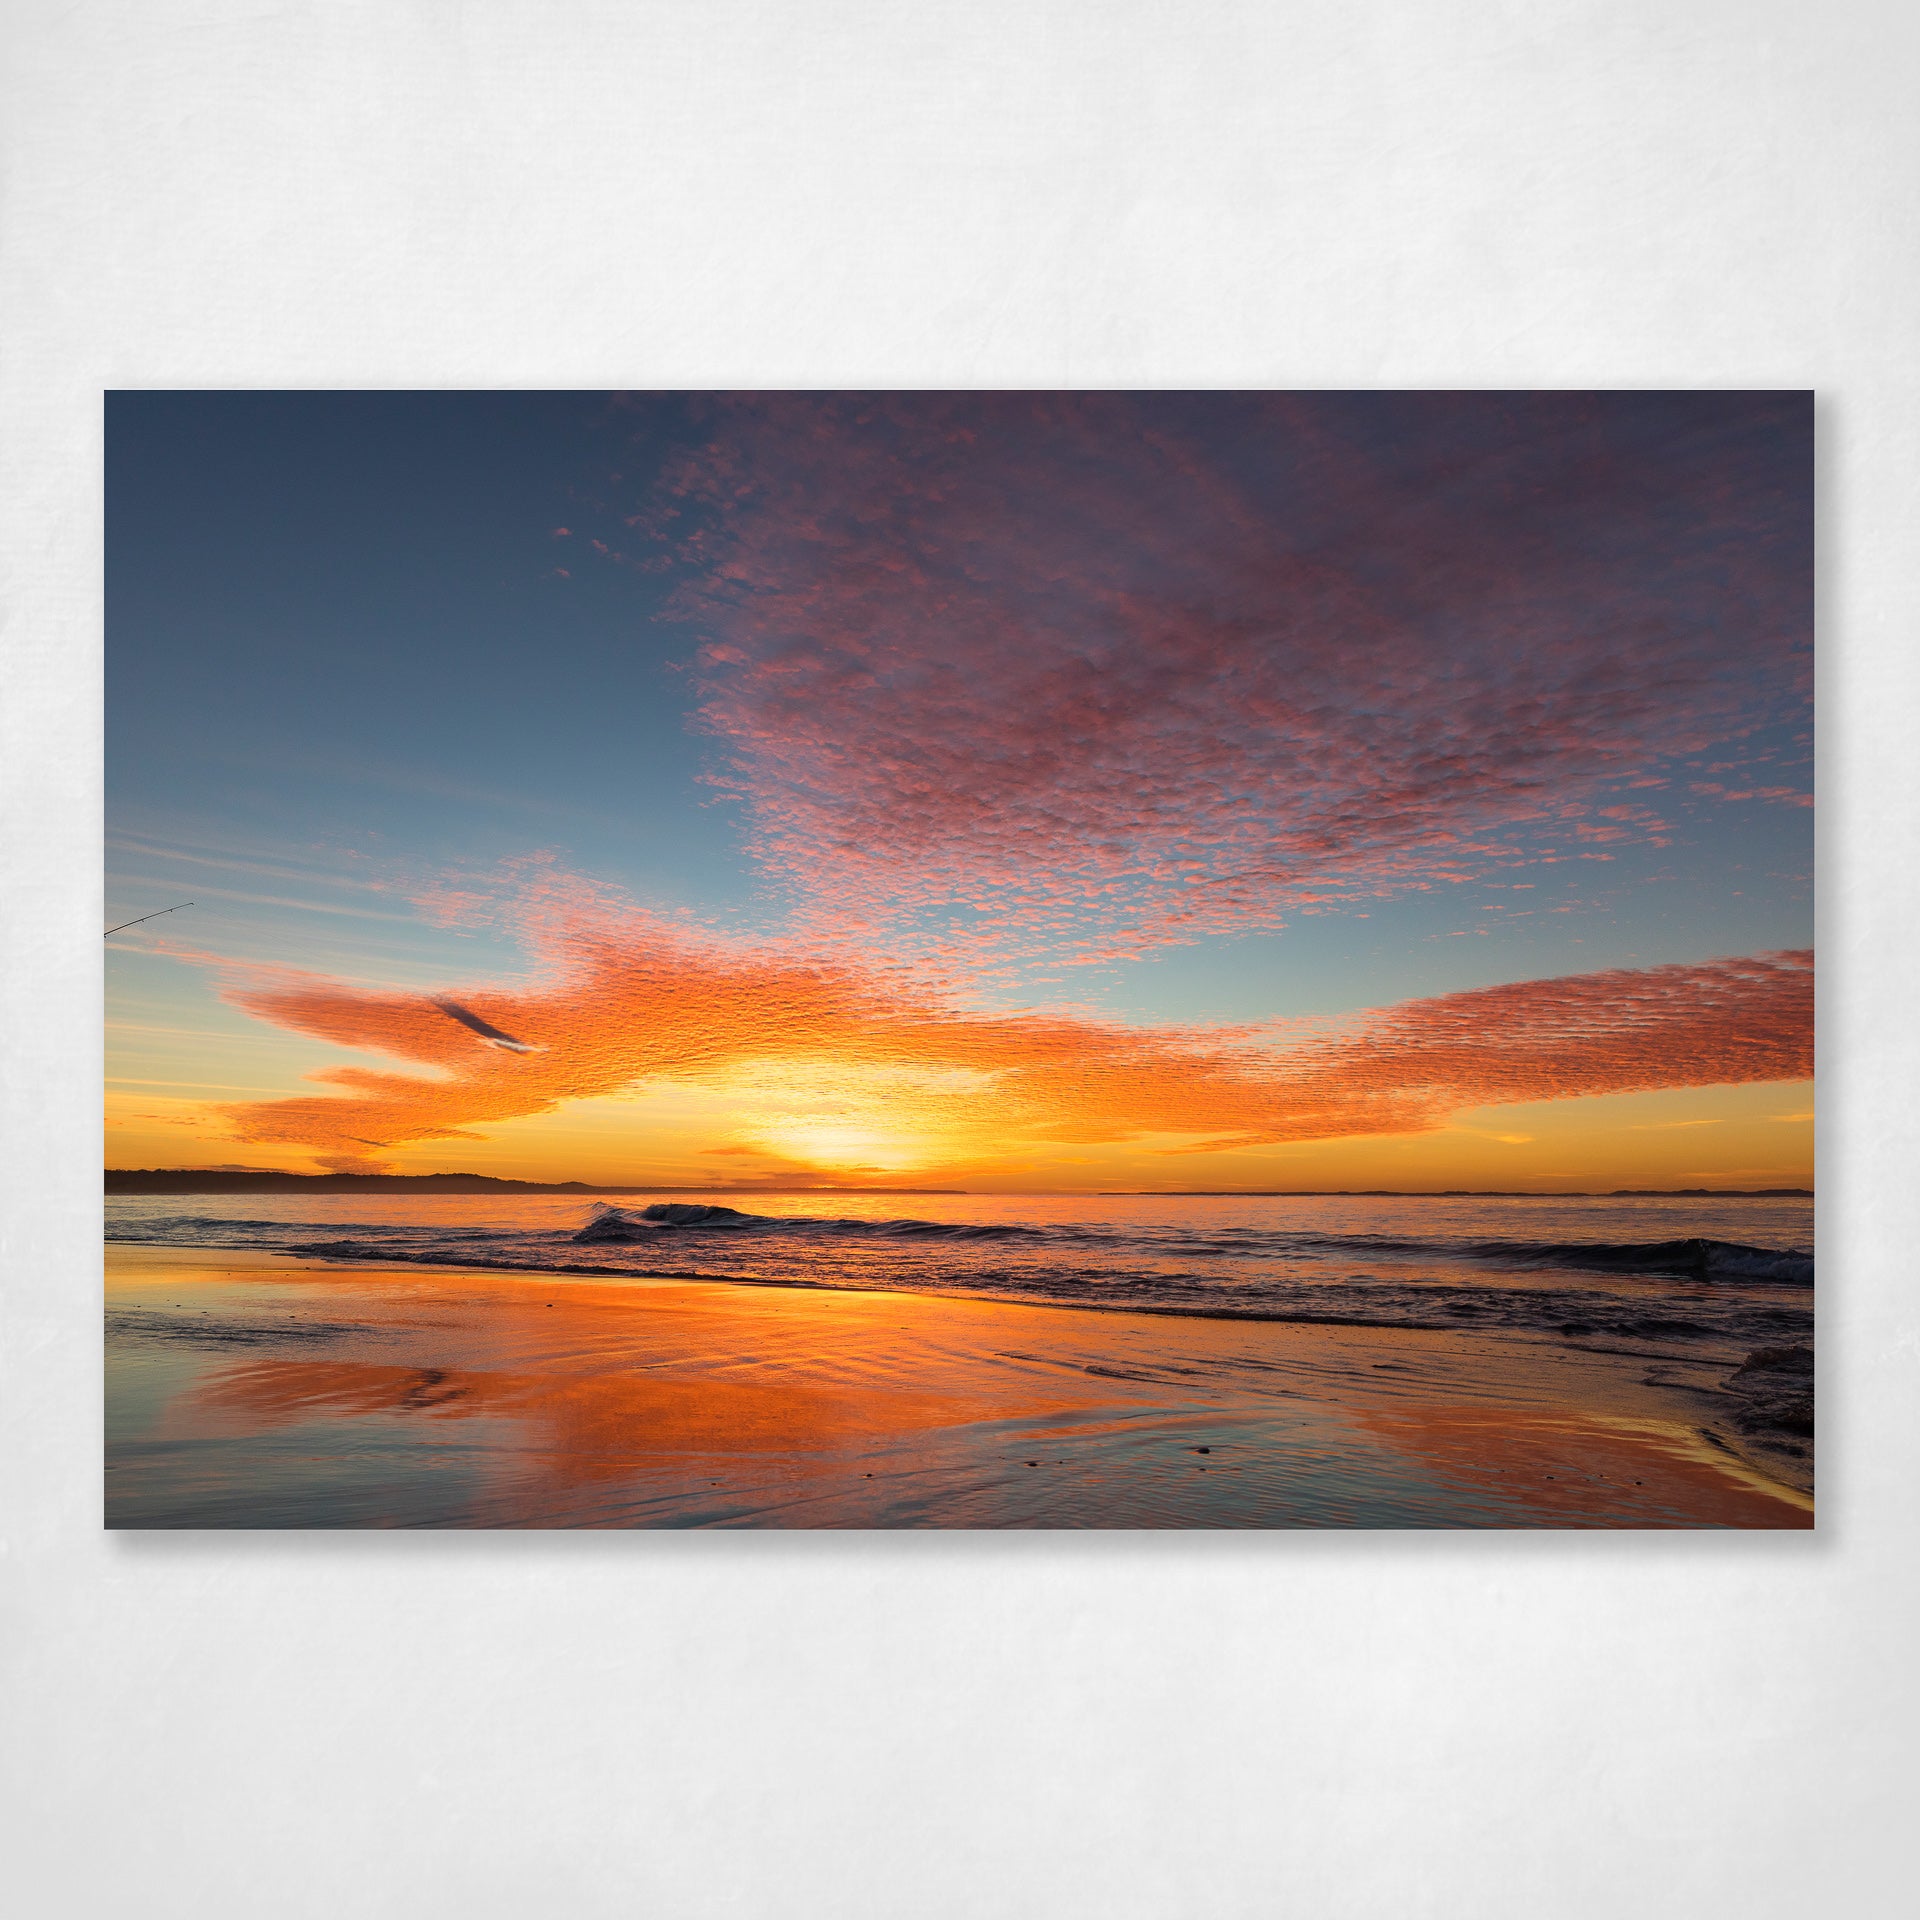 The Great Eye Sunset at Flinders Beach